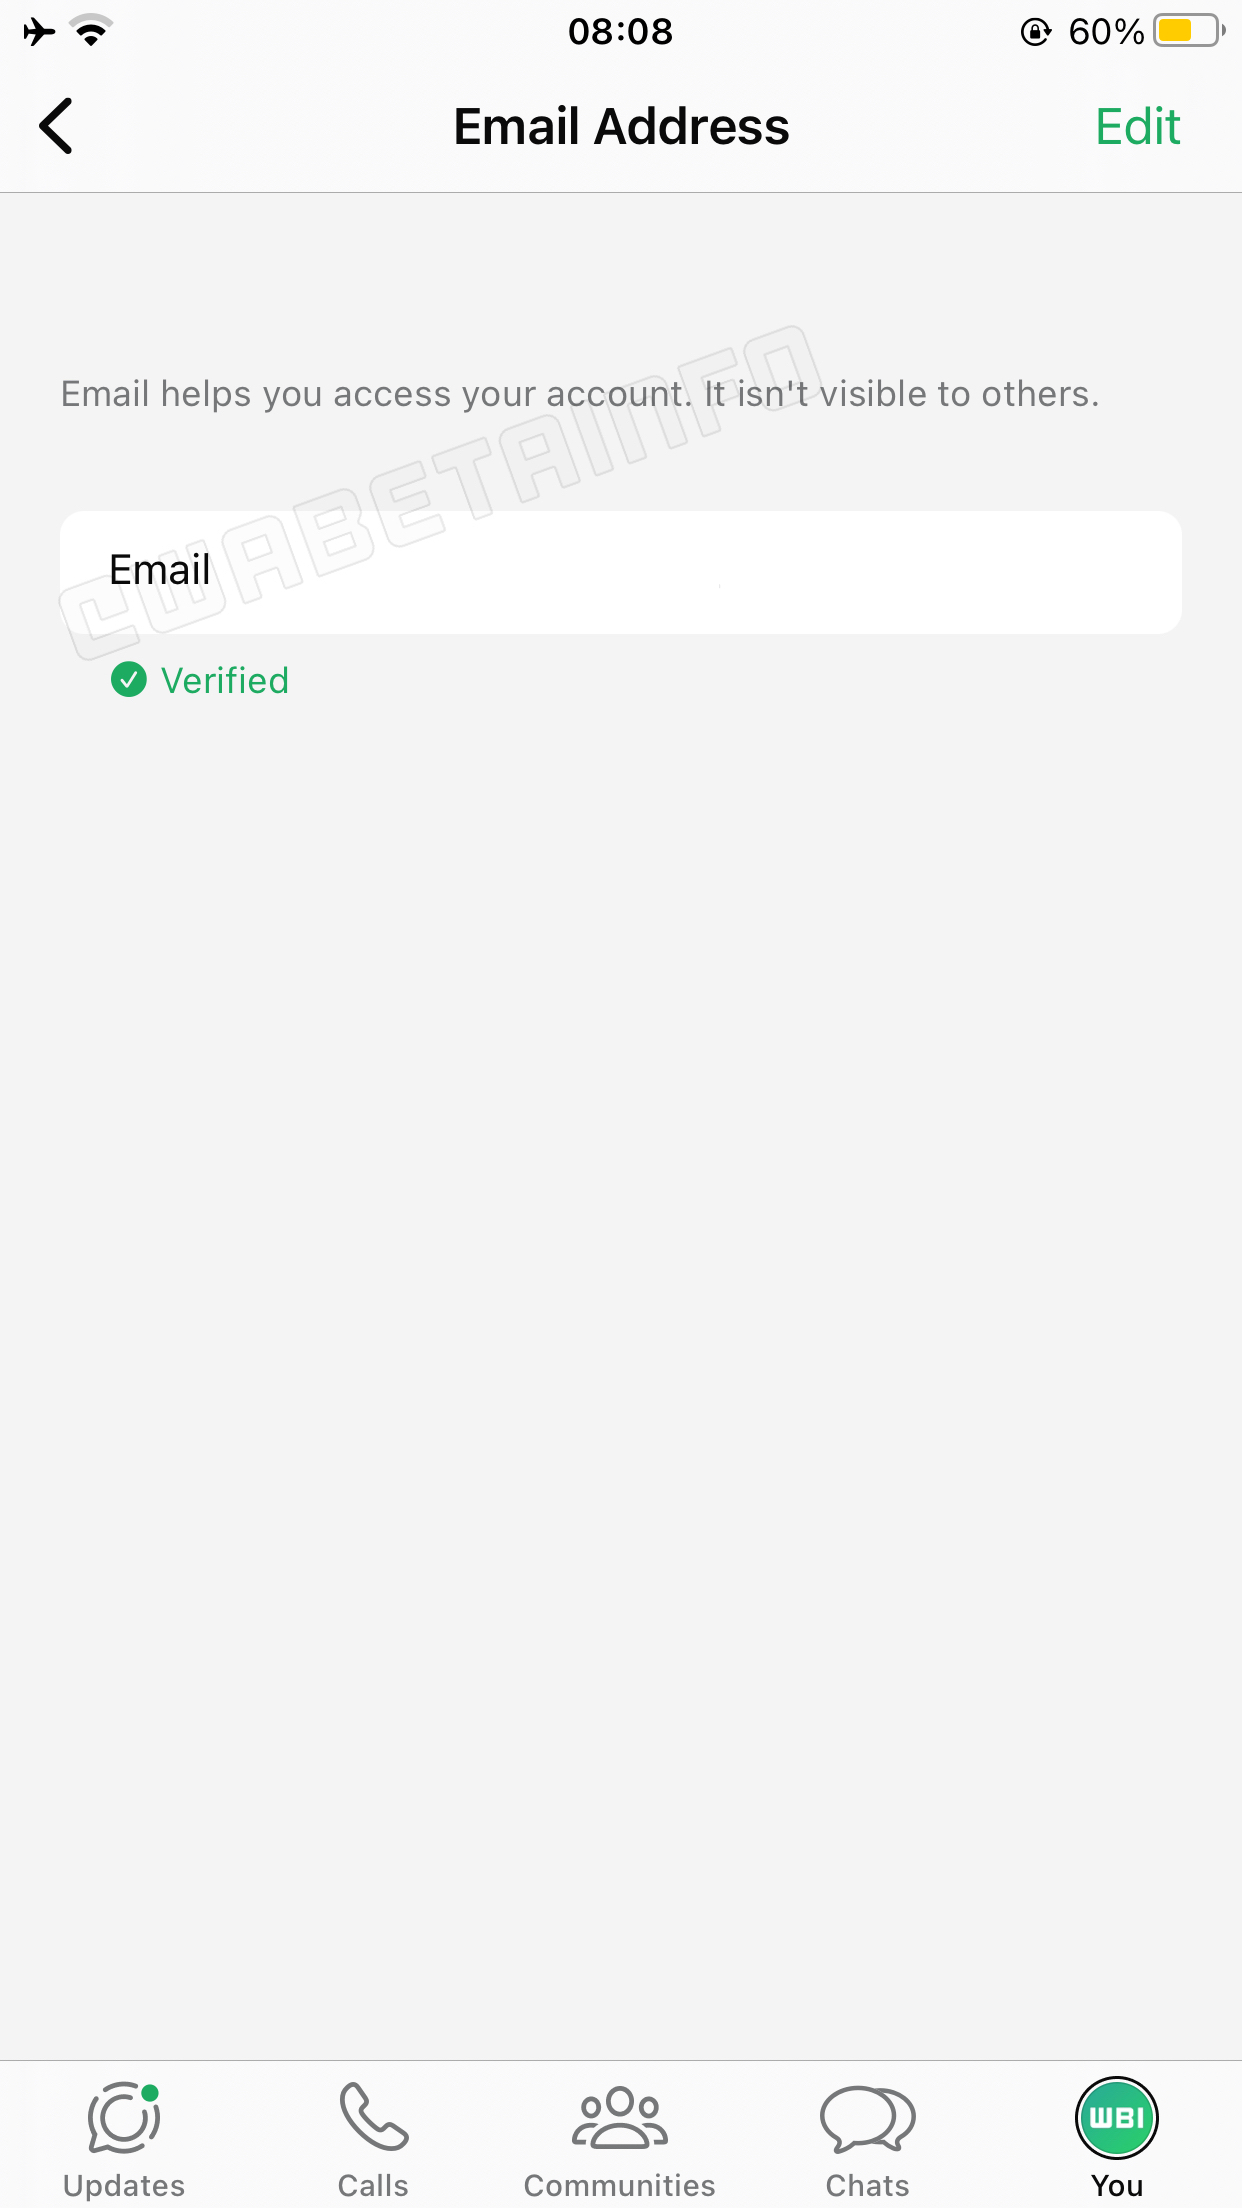 WhatsApp email verification